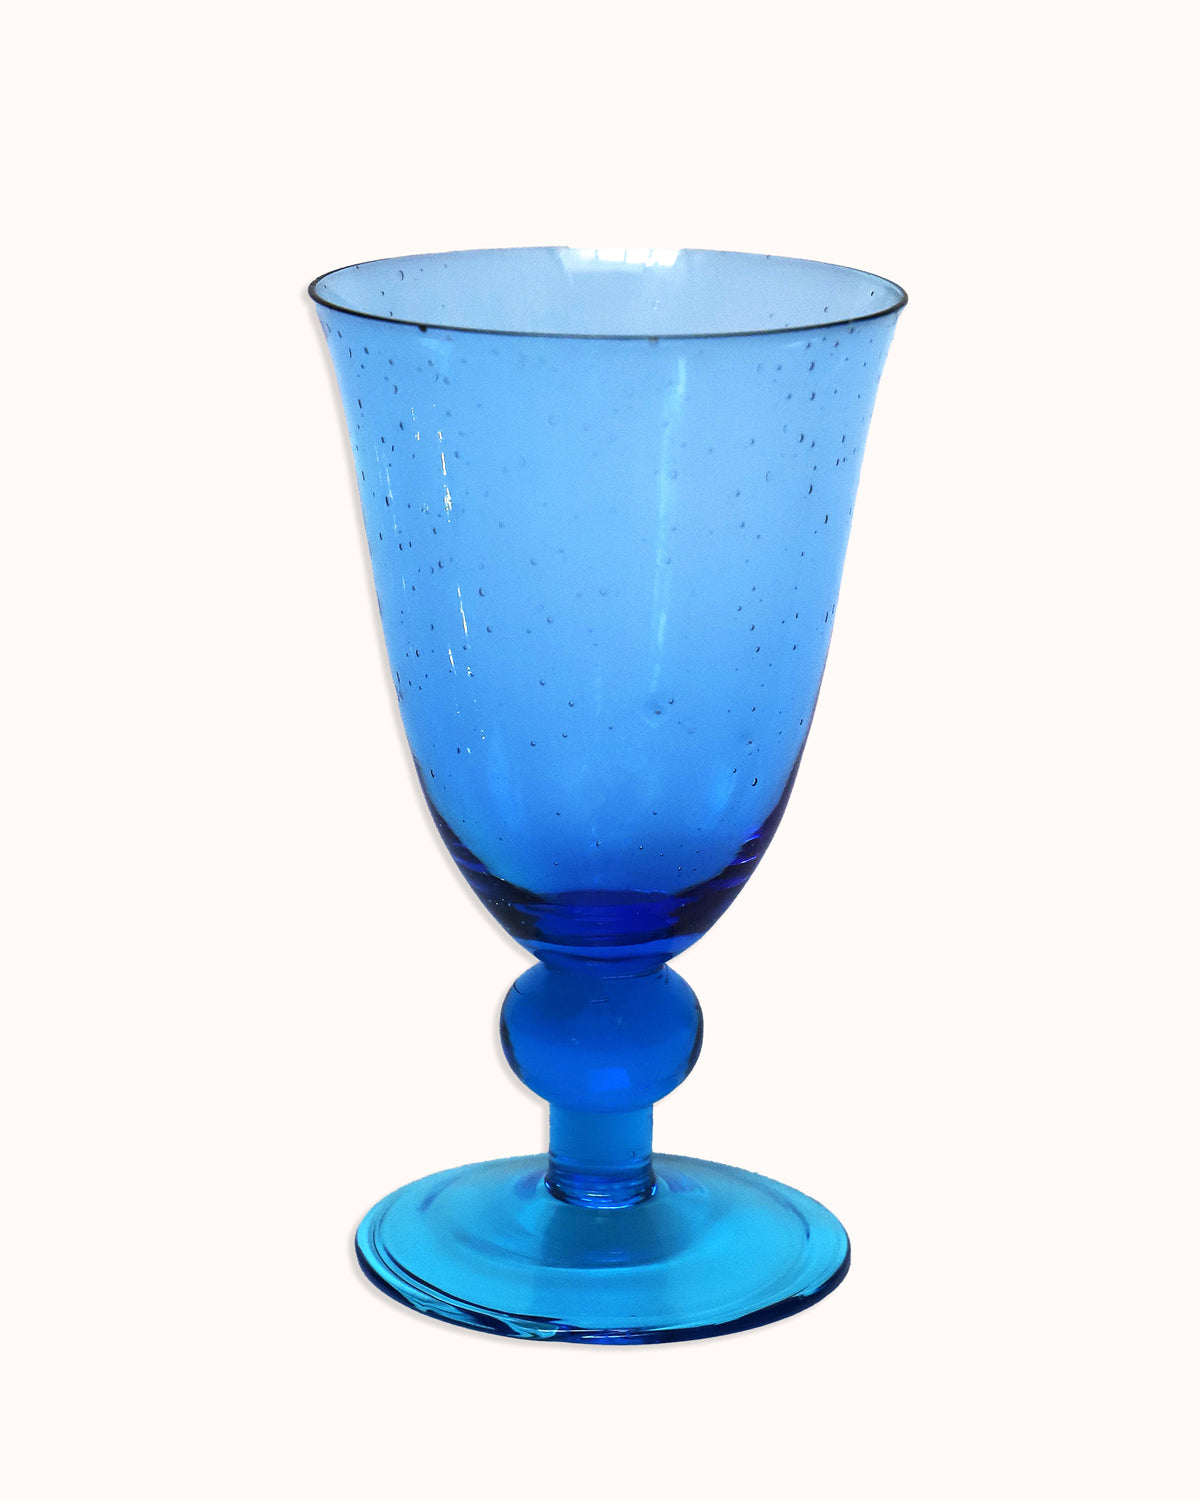 Vintage Set of Blue Biot Style Water or Wine Glasses